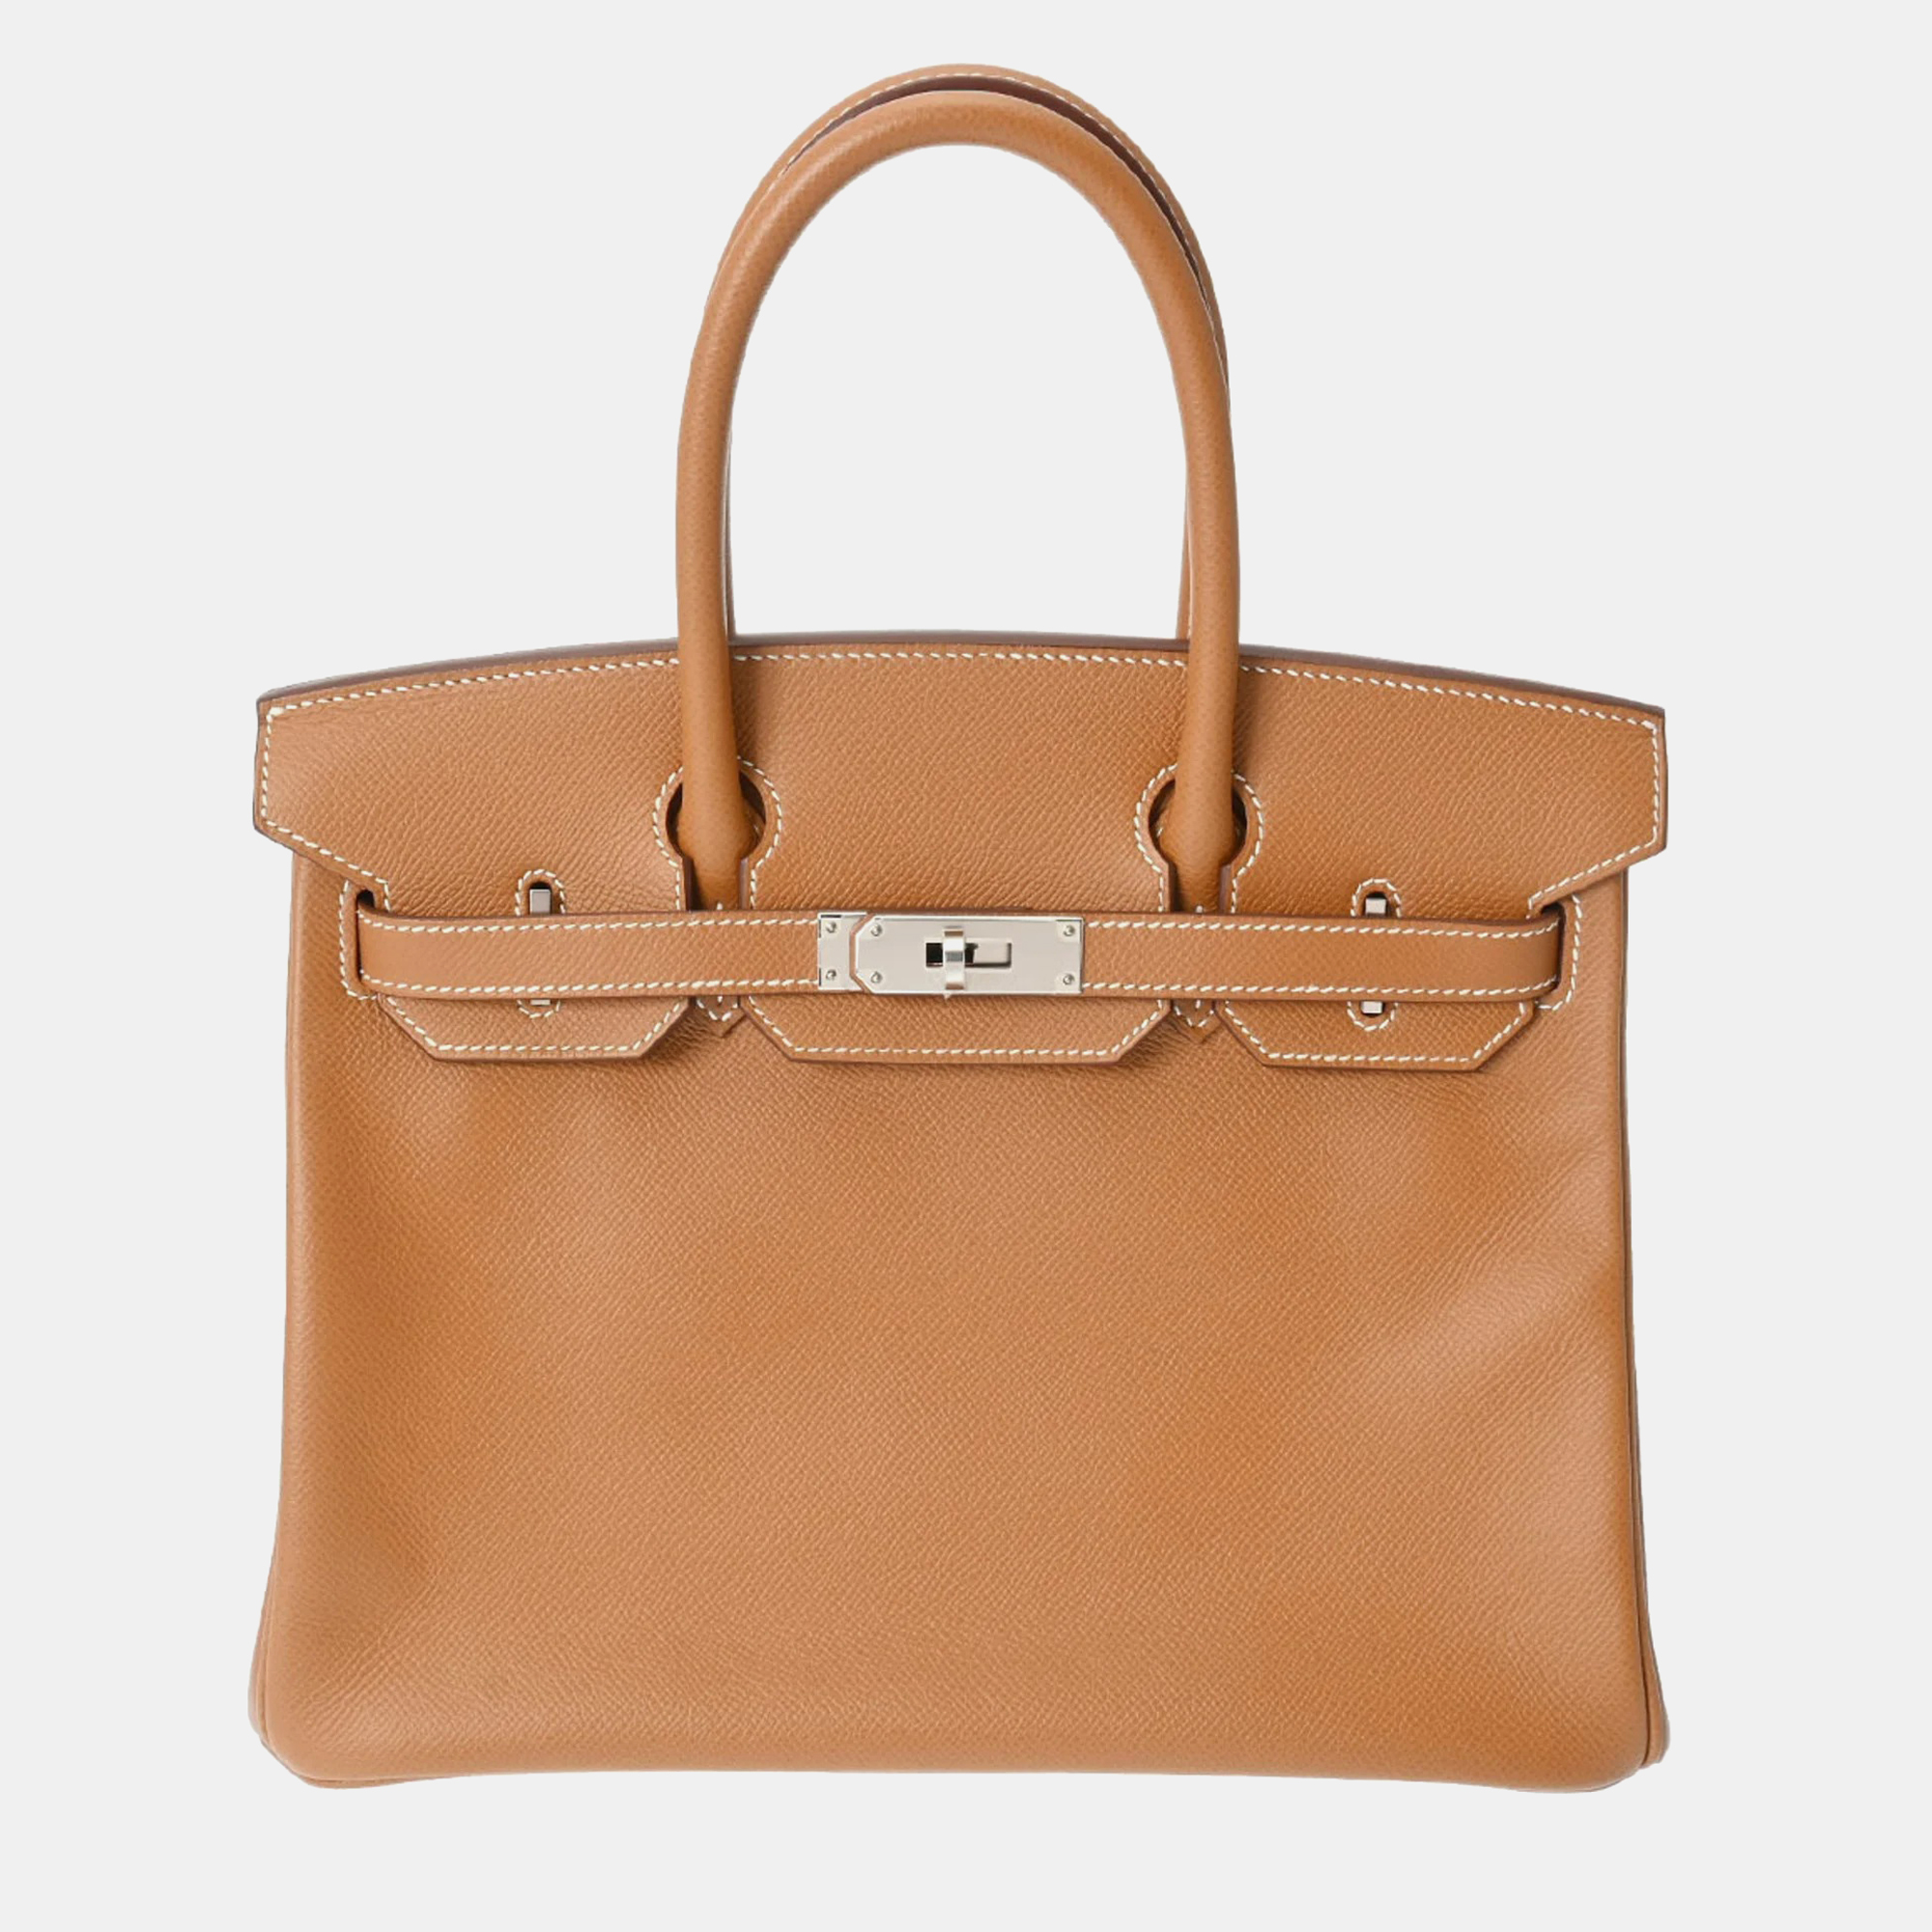 Hermes gold epsom leather birkin 30 handbag